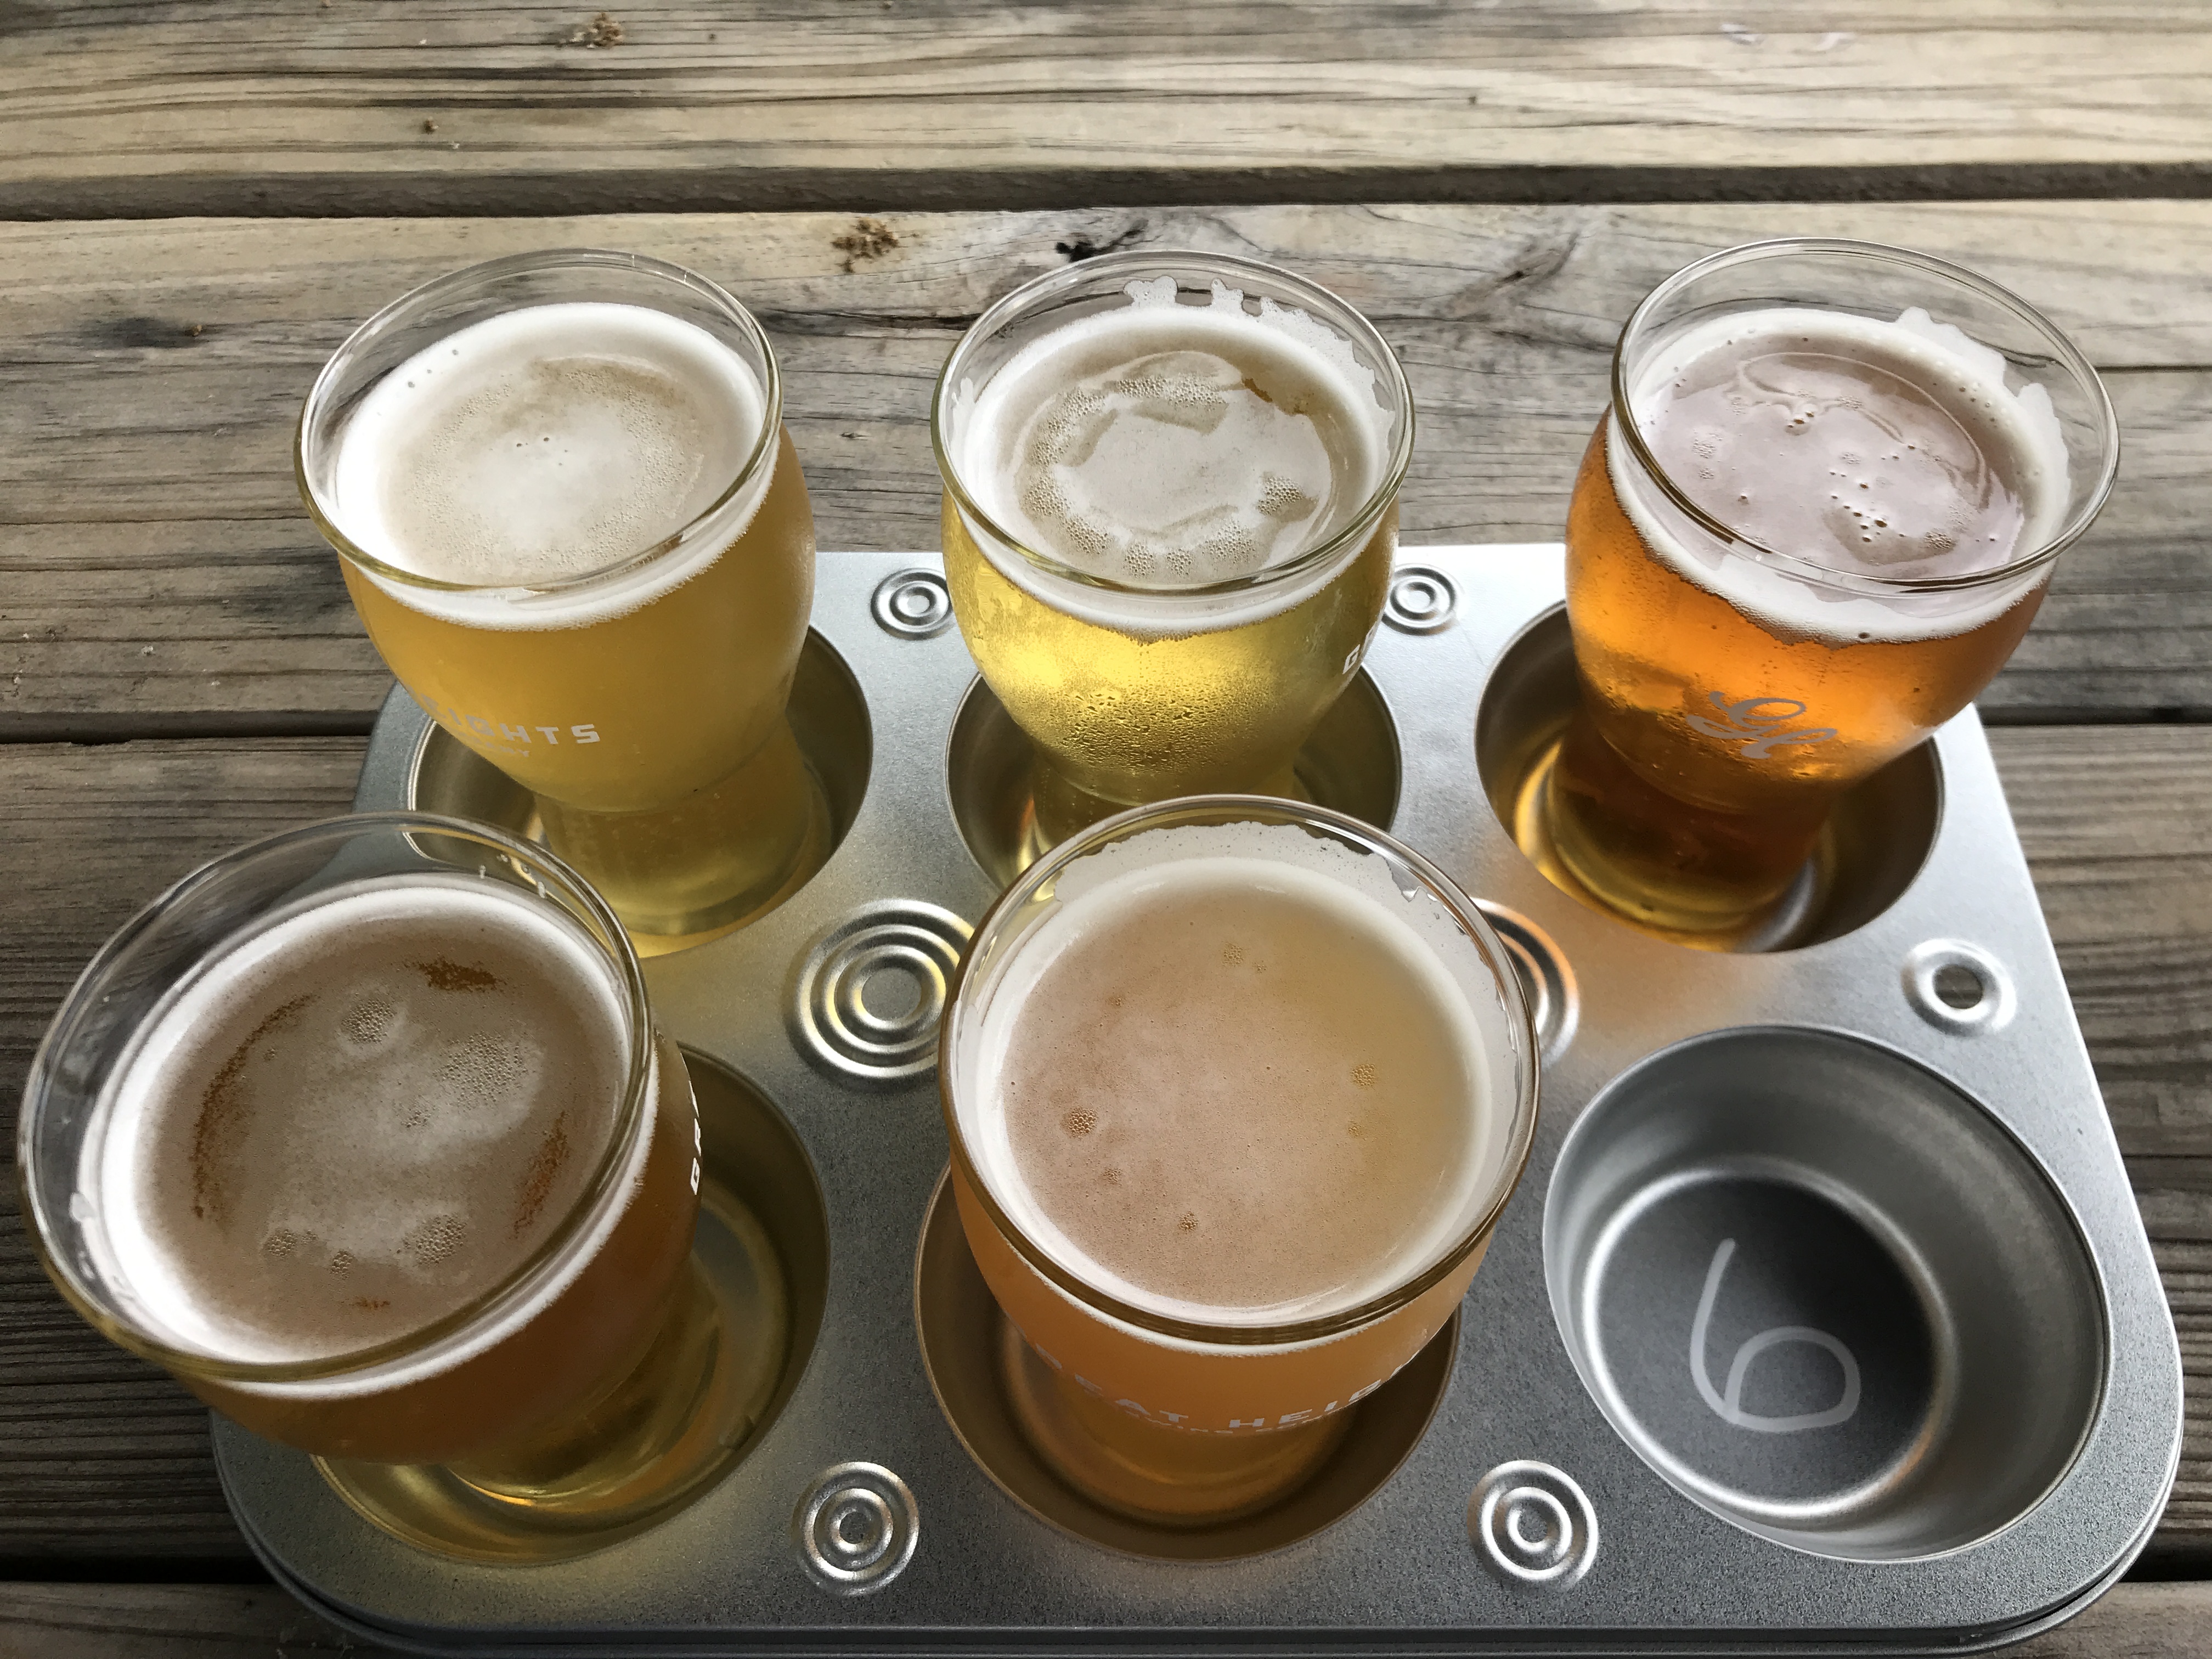 Samper platter of beers